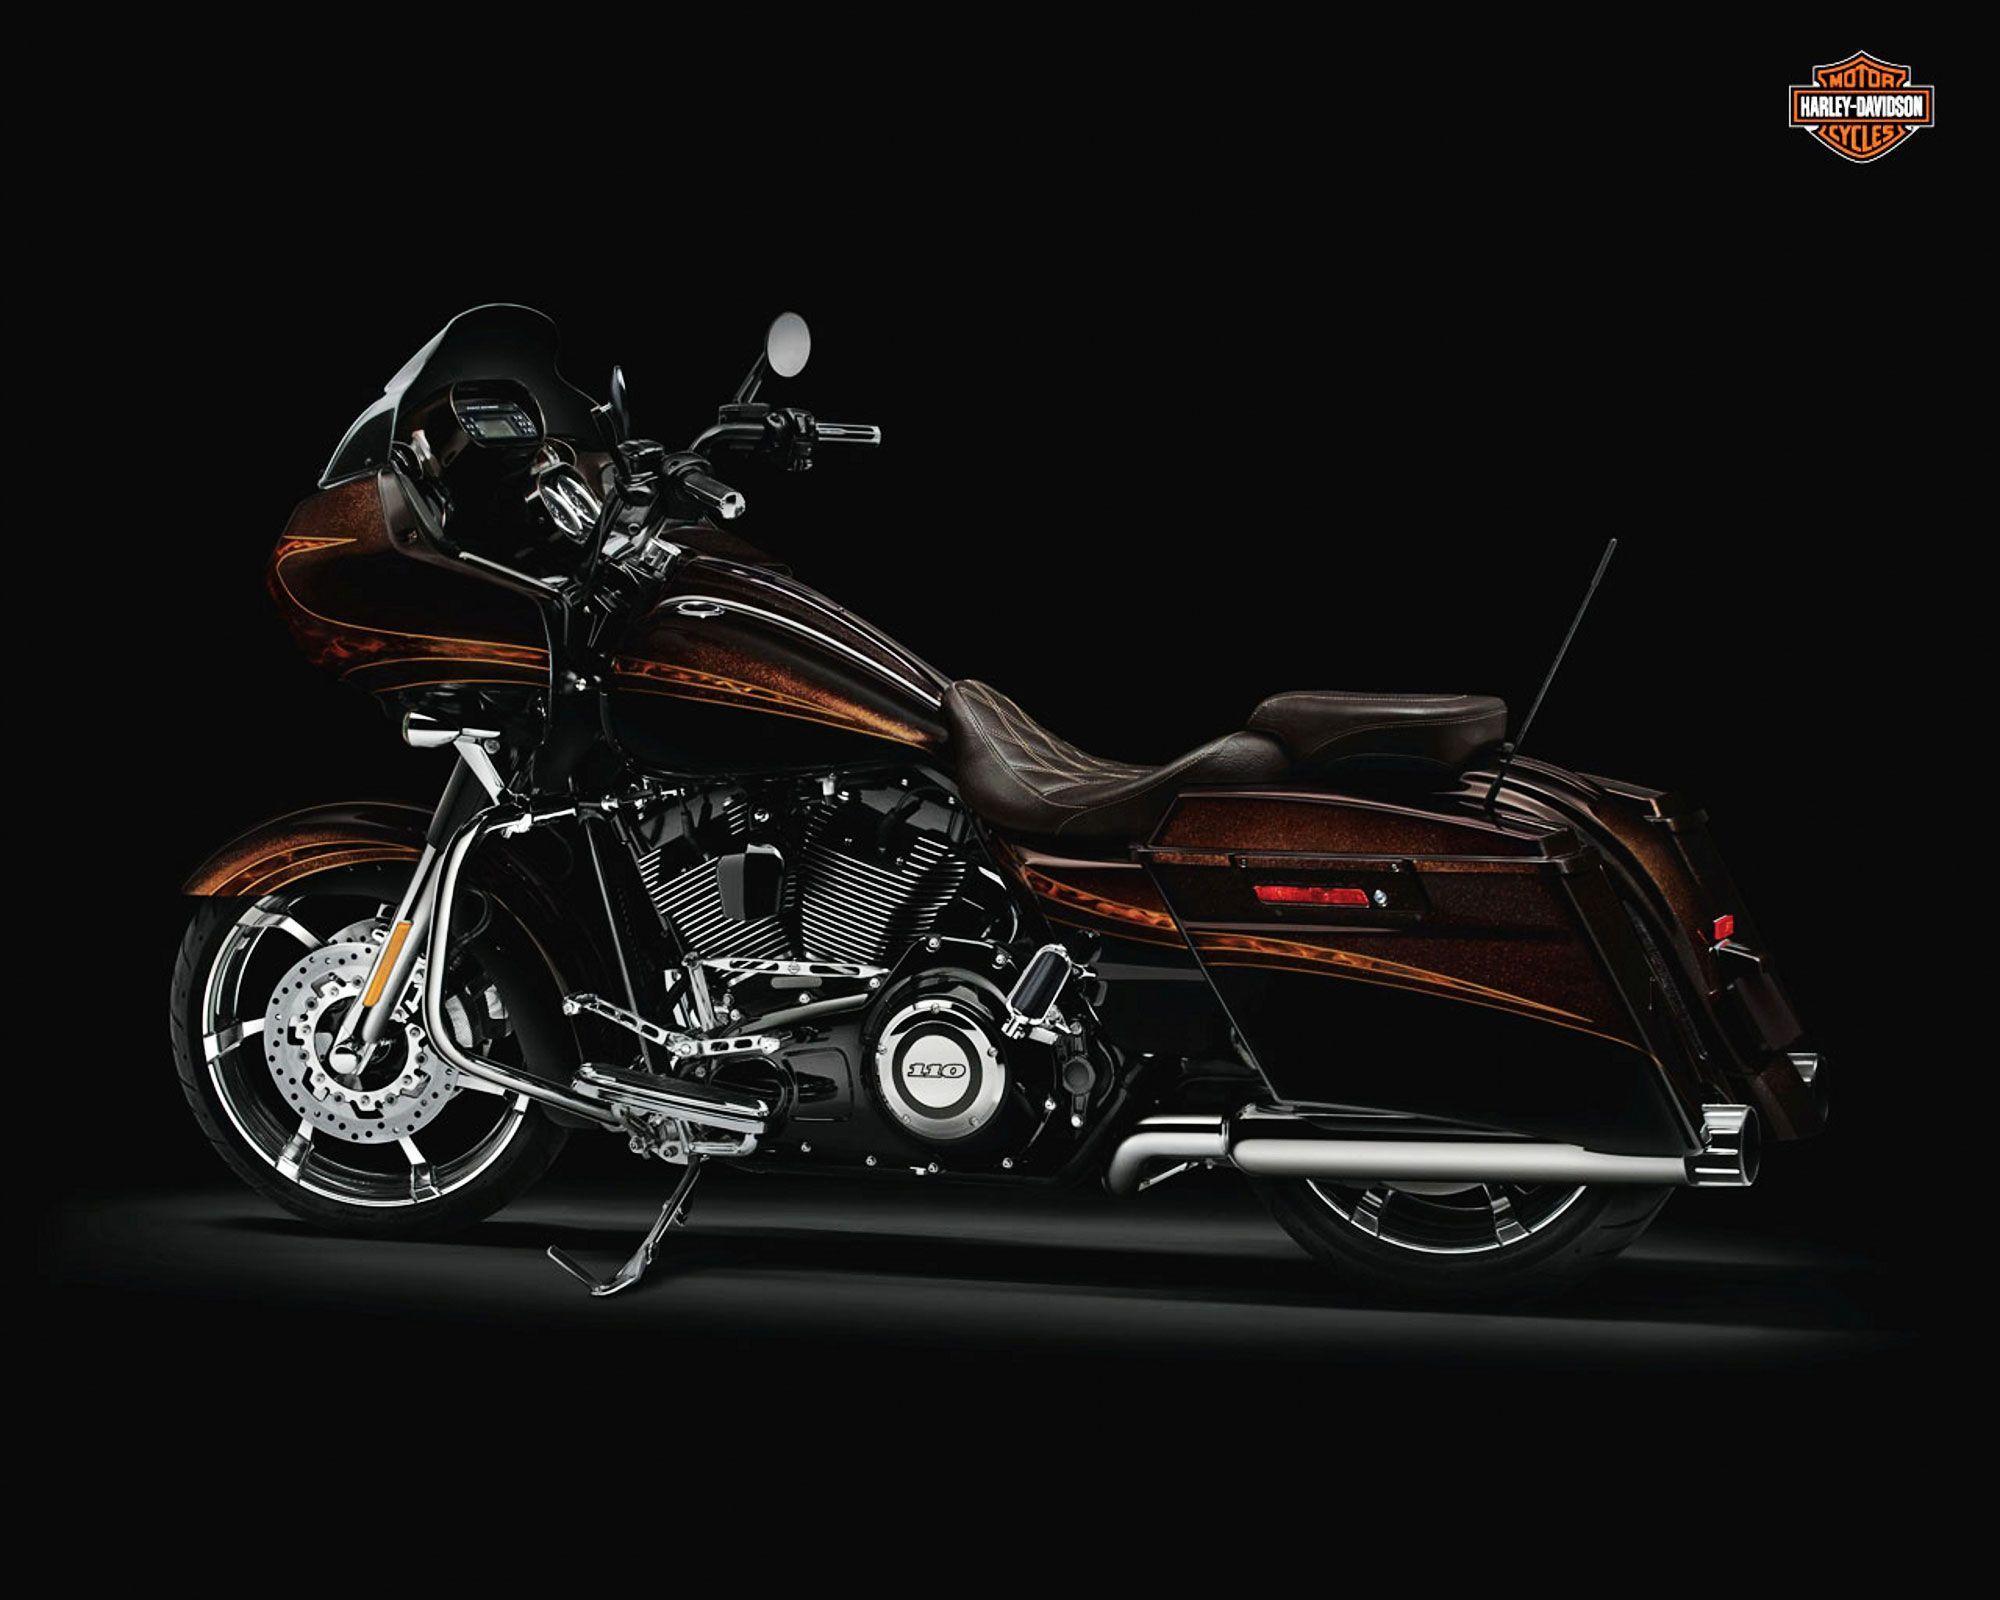 2014 Harley Davidson Wallpaper Harley Davidson HD Free Wallpaper